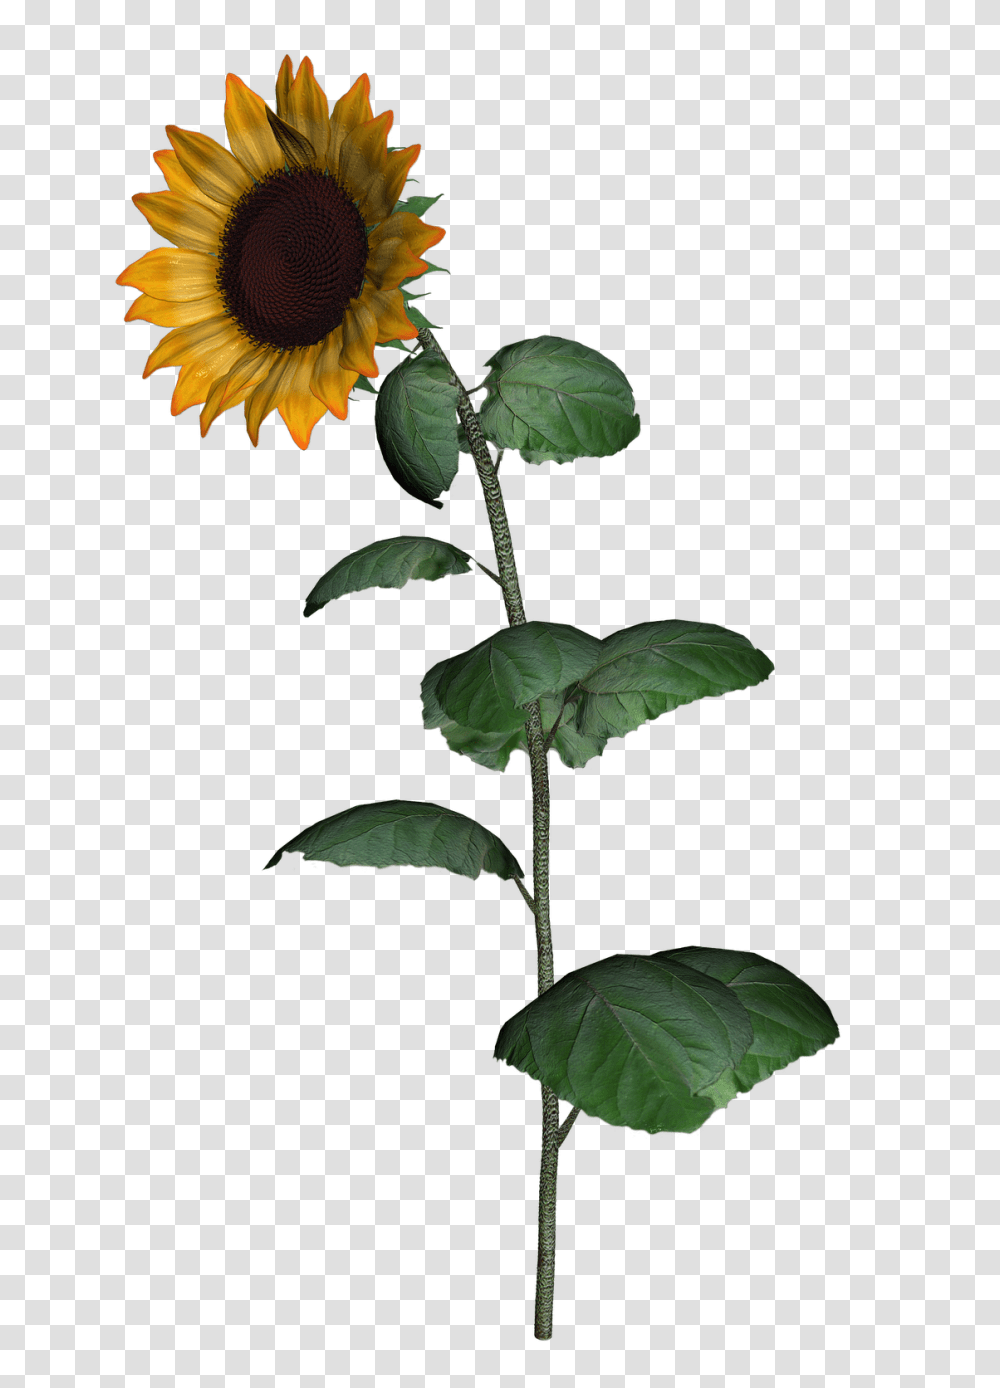 Sunflower Clipart With Leaf Images Sunflower Stem, Plant, Blossom, Potted Plant, Vase Transparent Png